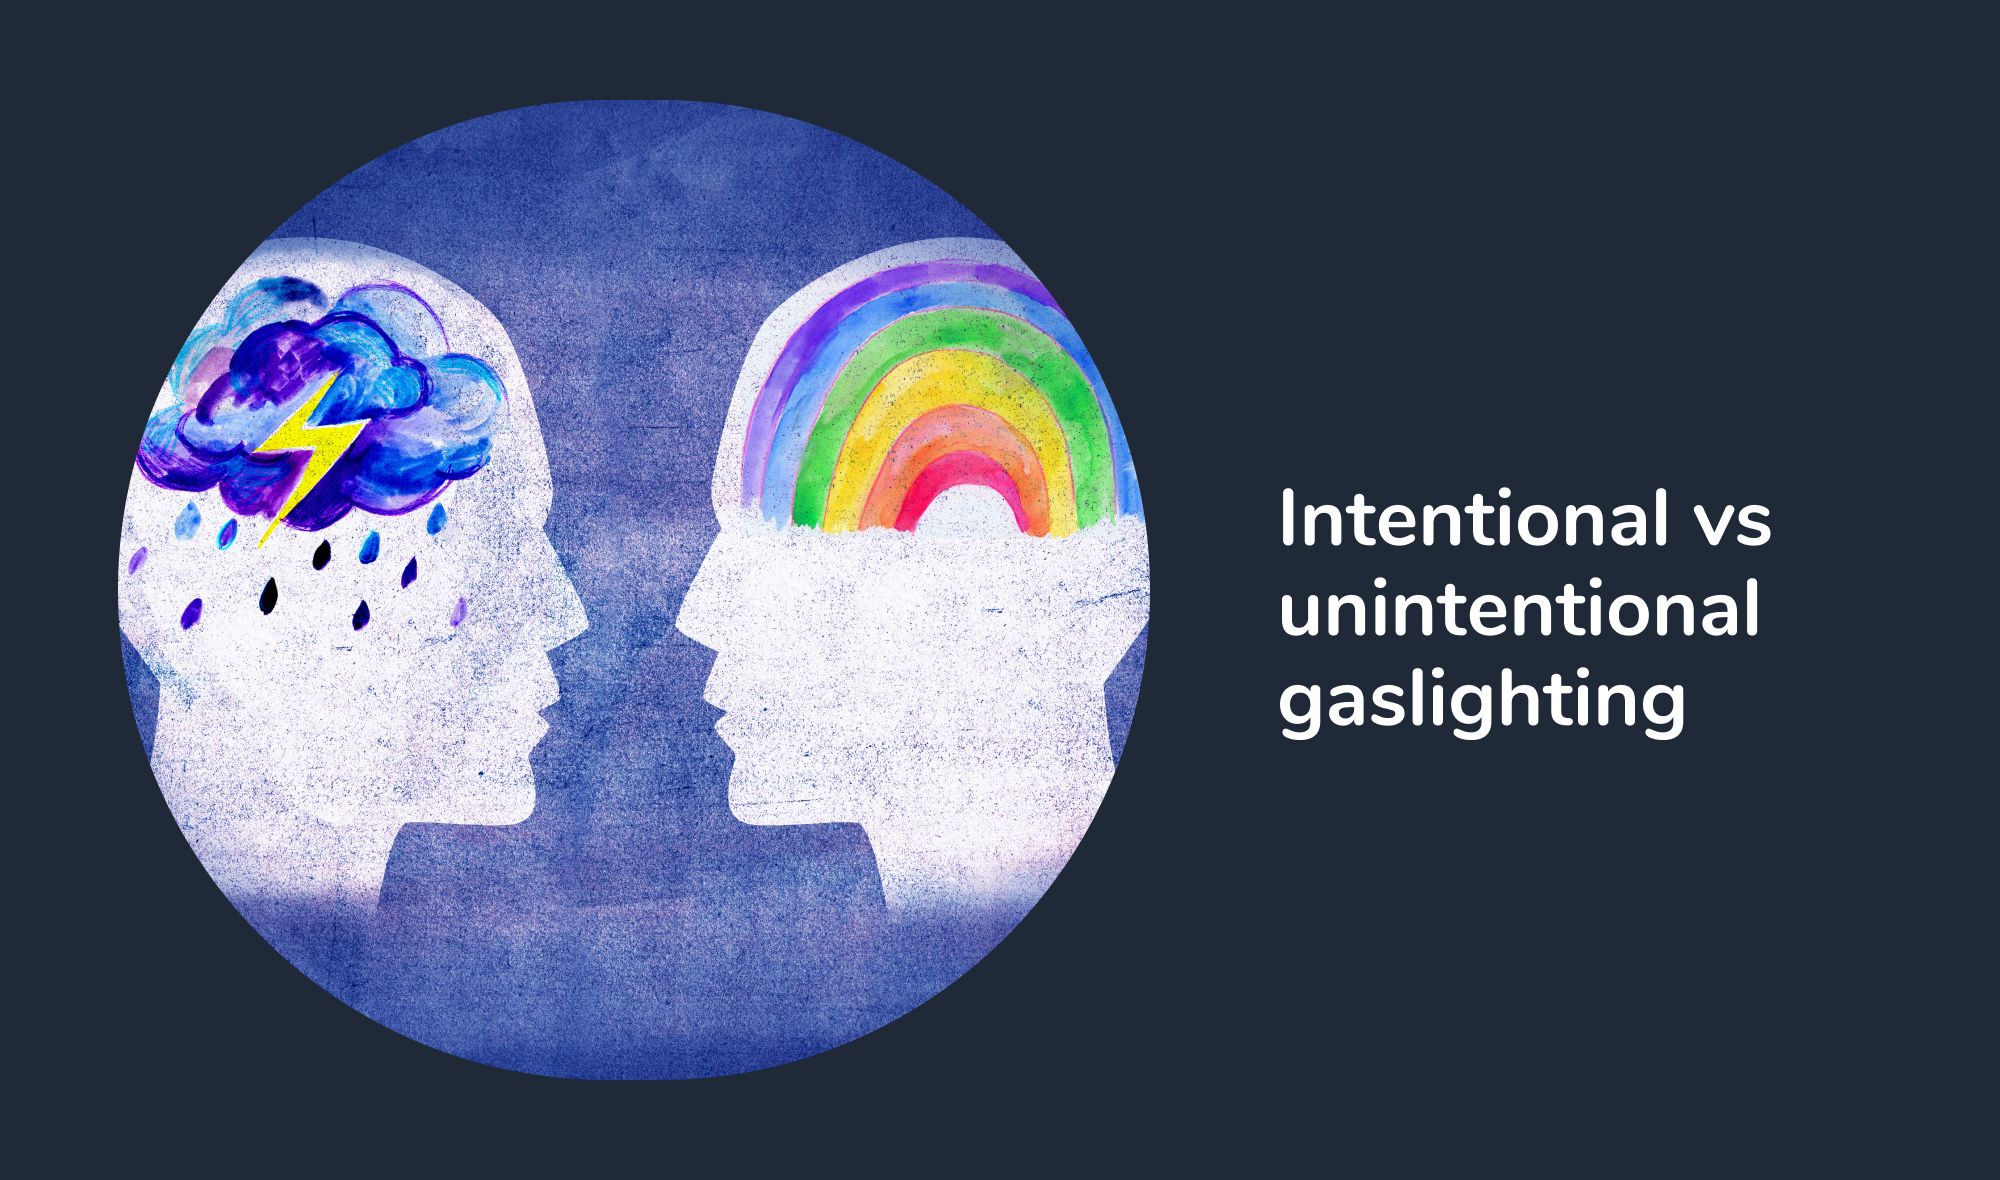 10 signs of gaslighting: Intentional vs unintentional gaslighting